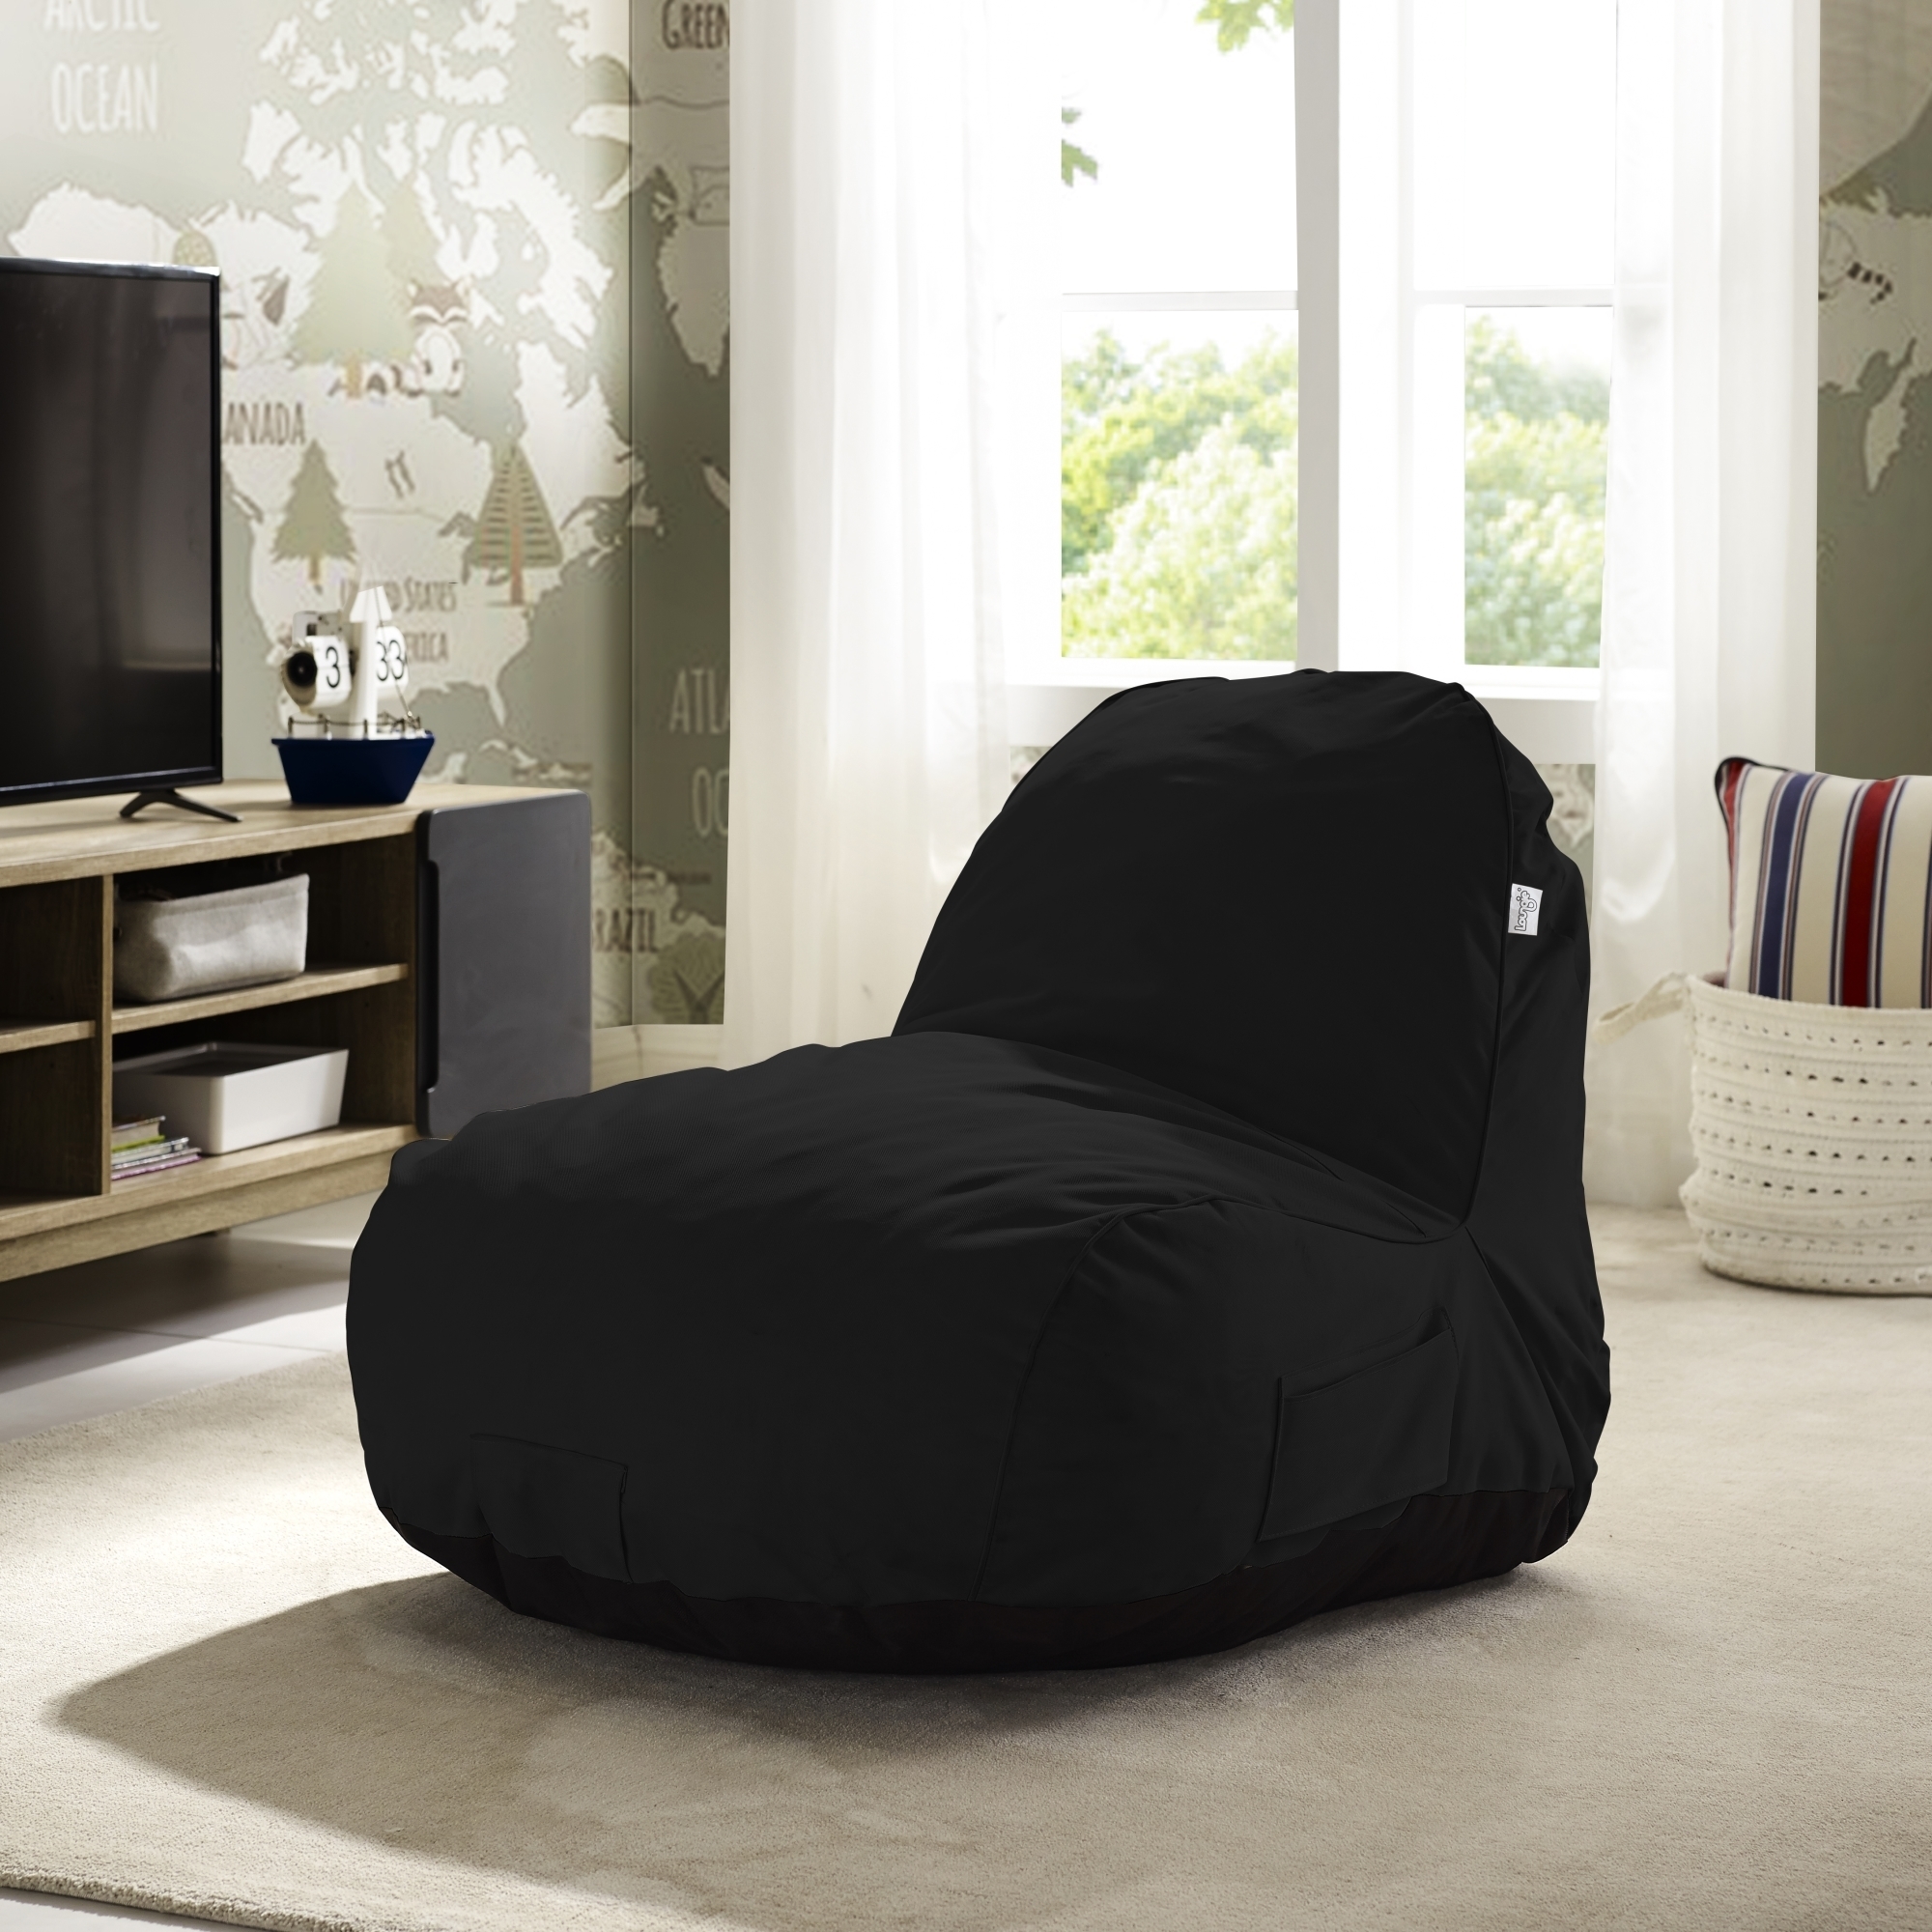 Loungie Cosmic Foam Lounge Chair-Nylon Bean Bag-Indoor- Outdoor-Self Expanding-Water Resistant - Black